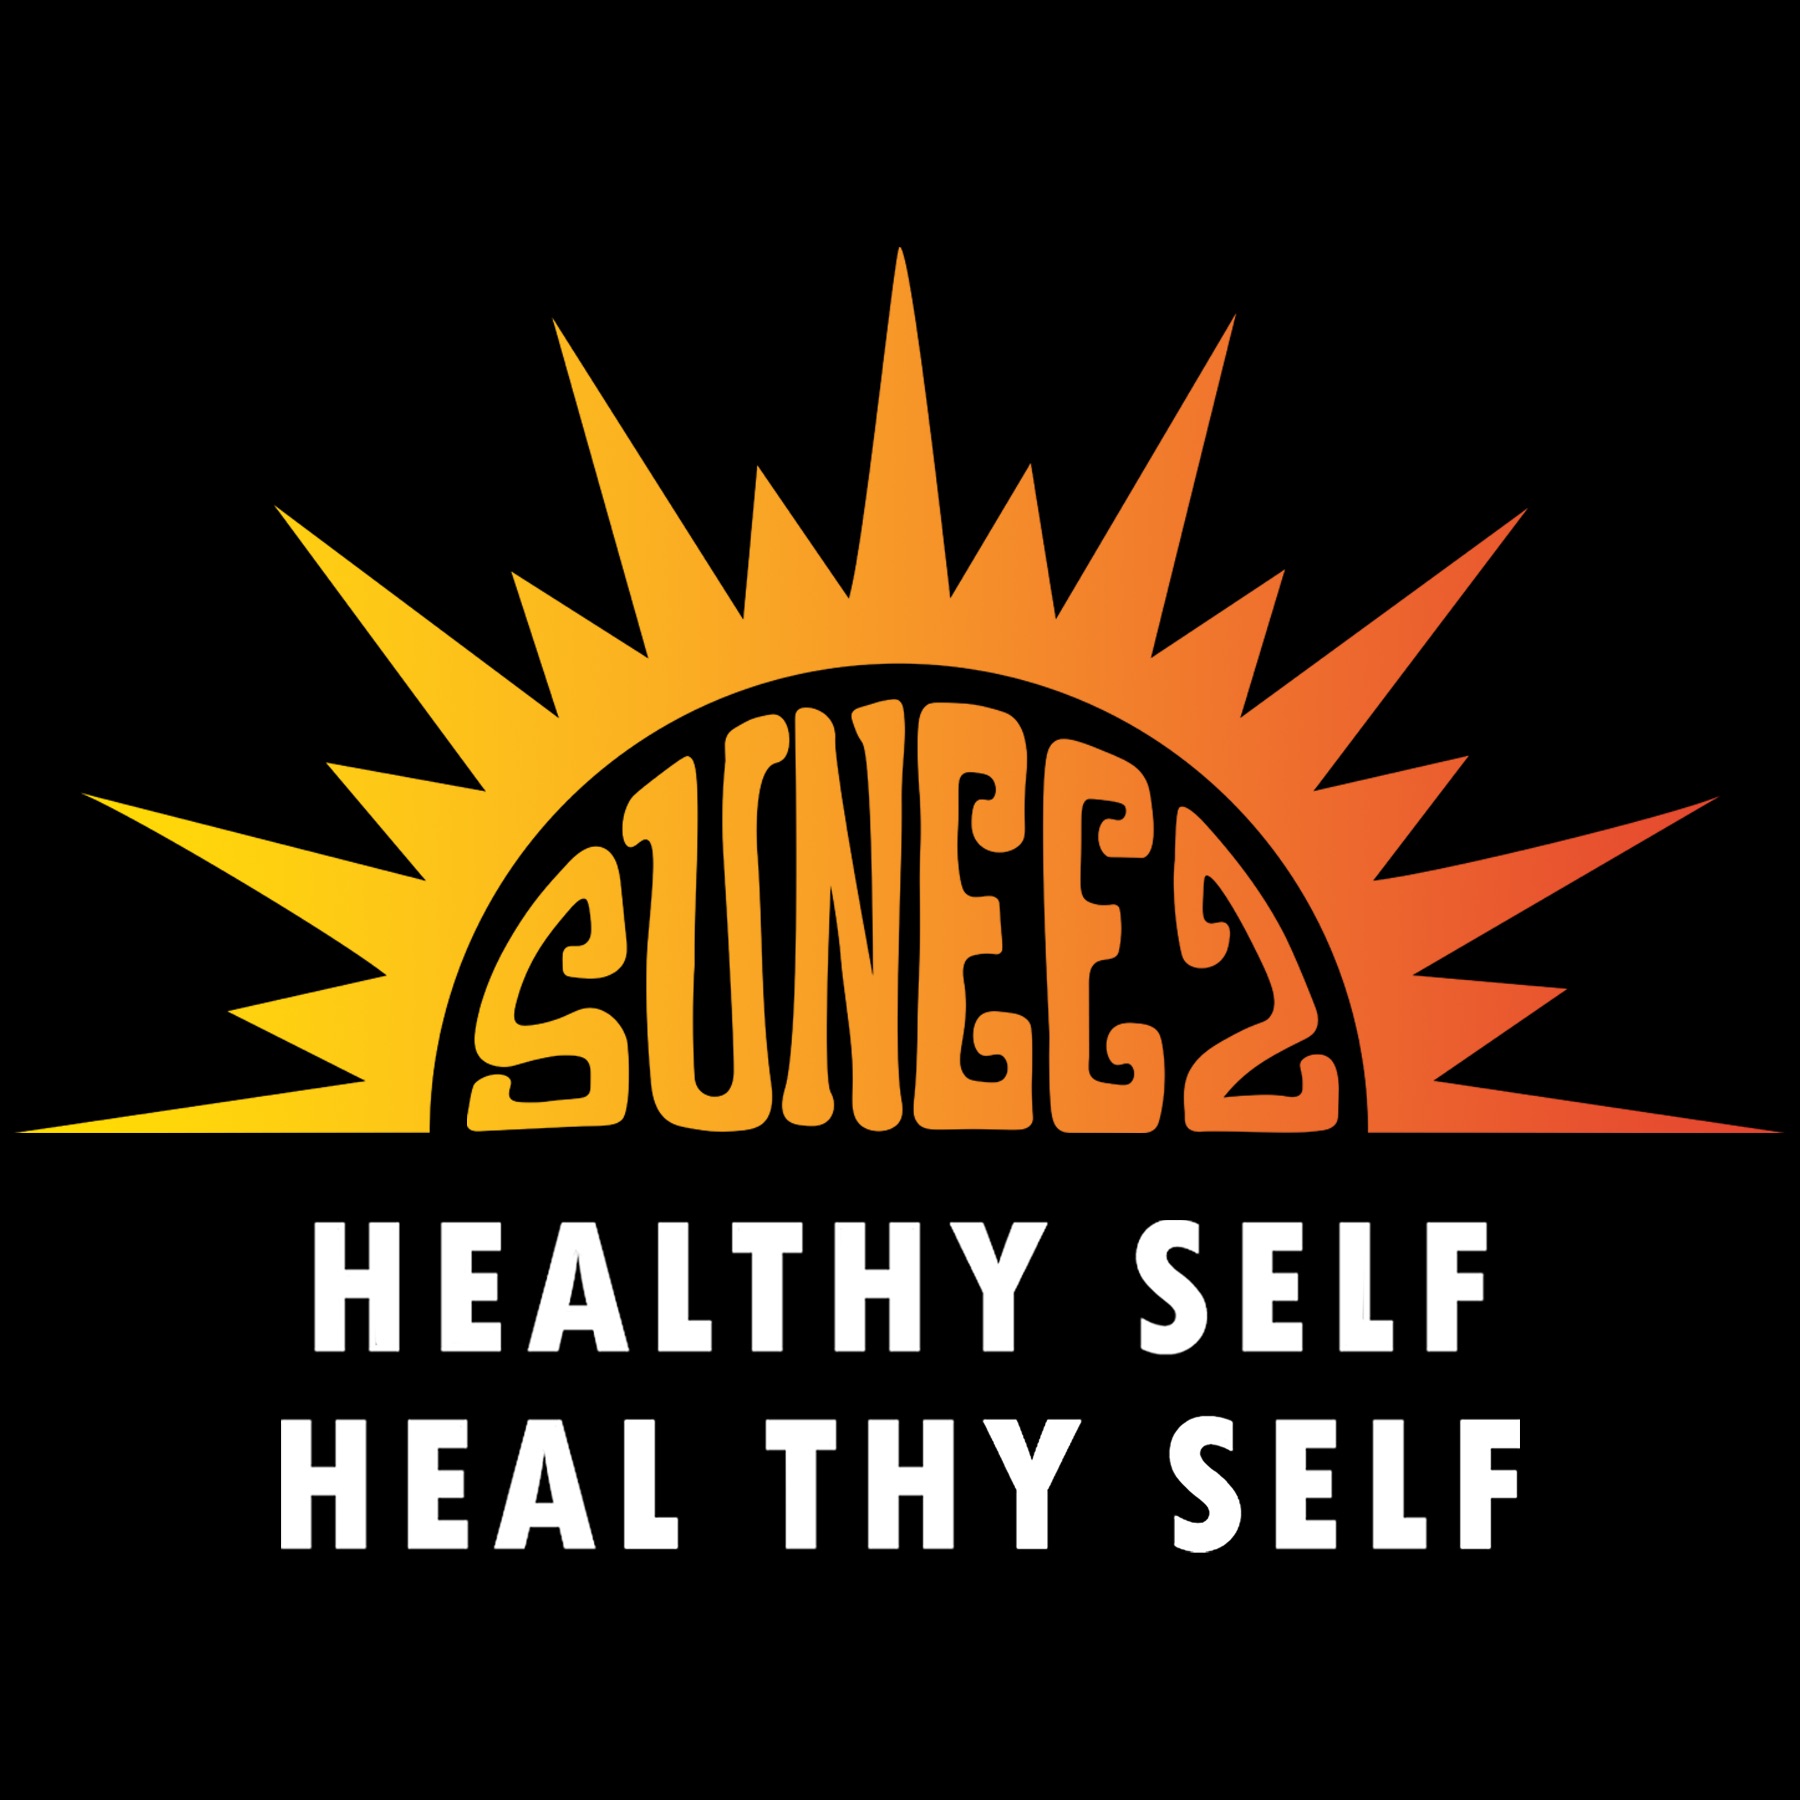 Suneez HealthySelf